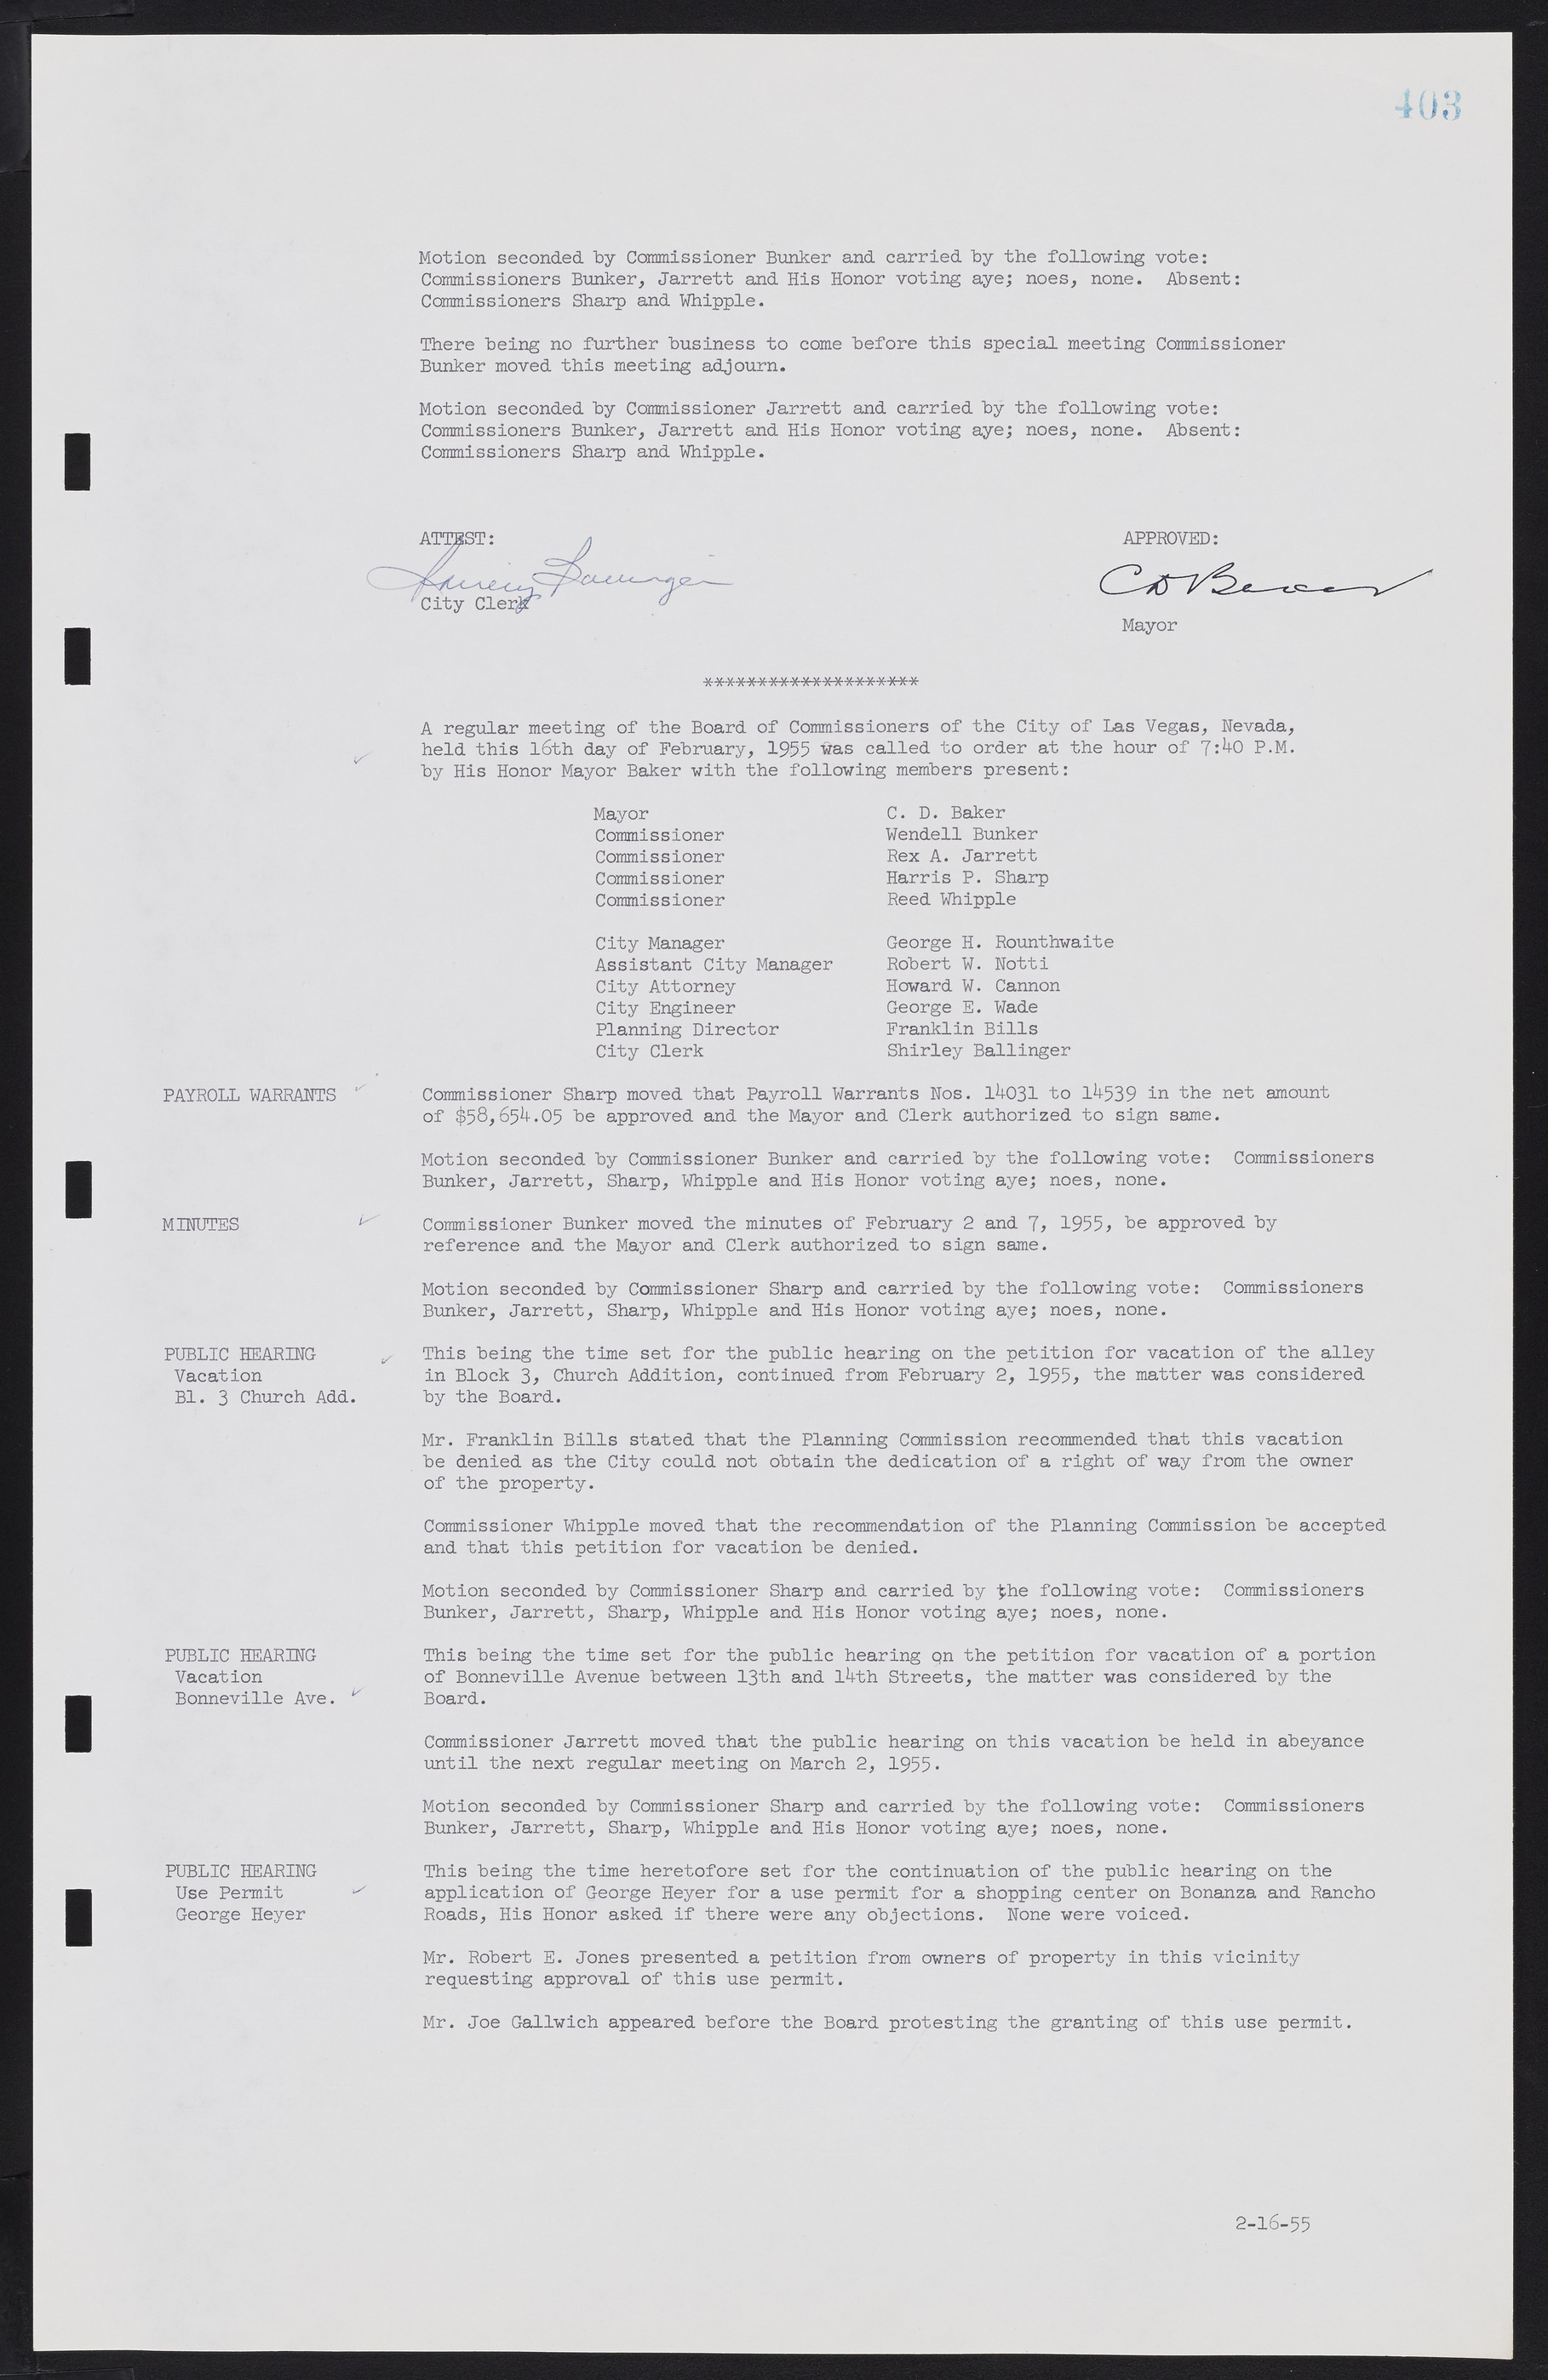 Las Vegas City Commission Minutes, February 17, 1954 to September 21, 1955, lvc000009-409